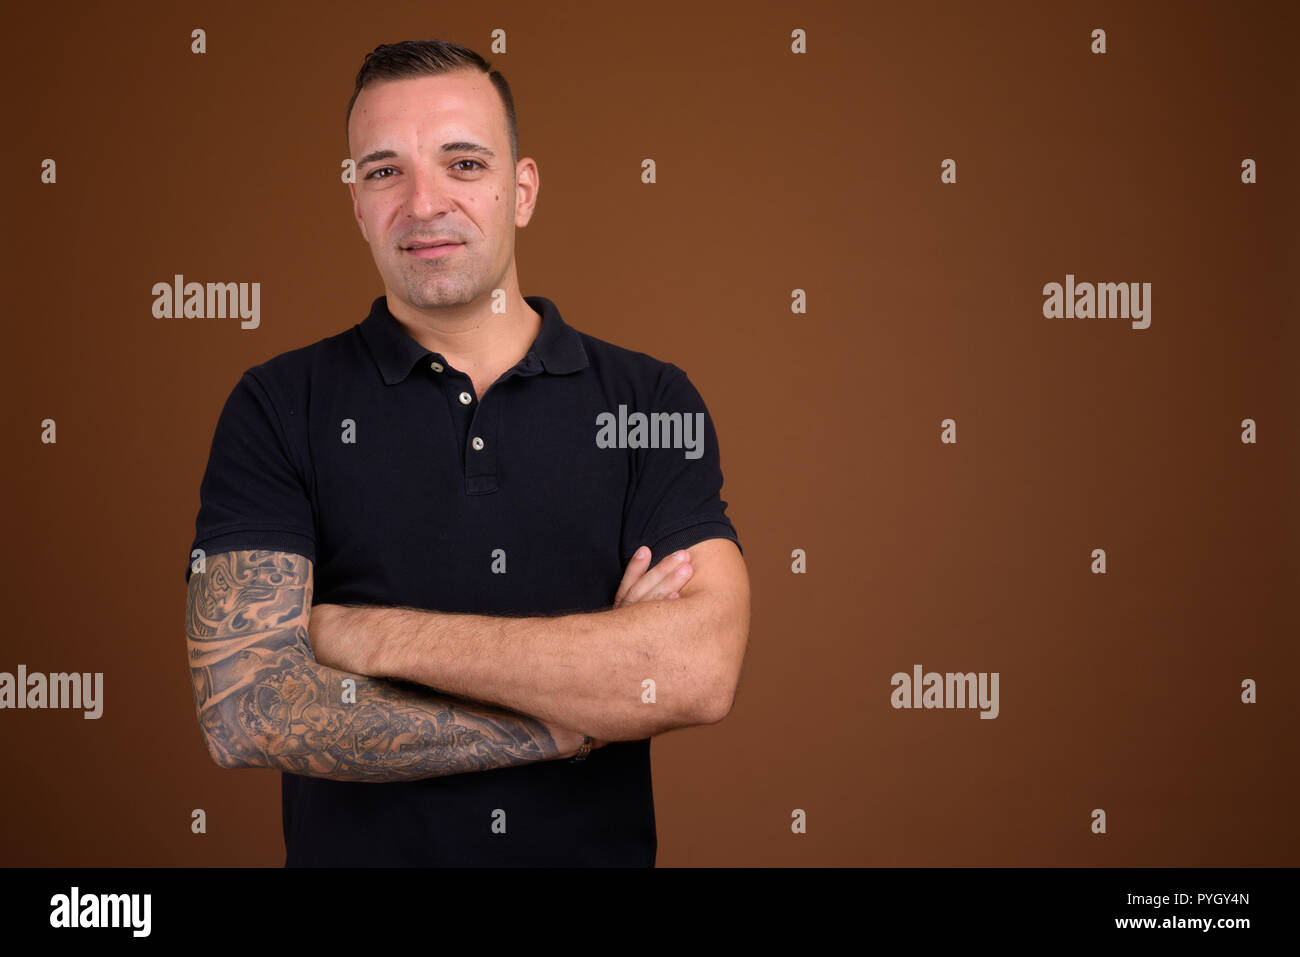 Man wearing black shirt against brown background Stock Photo